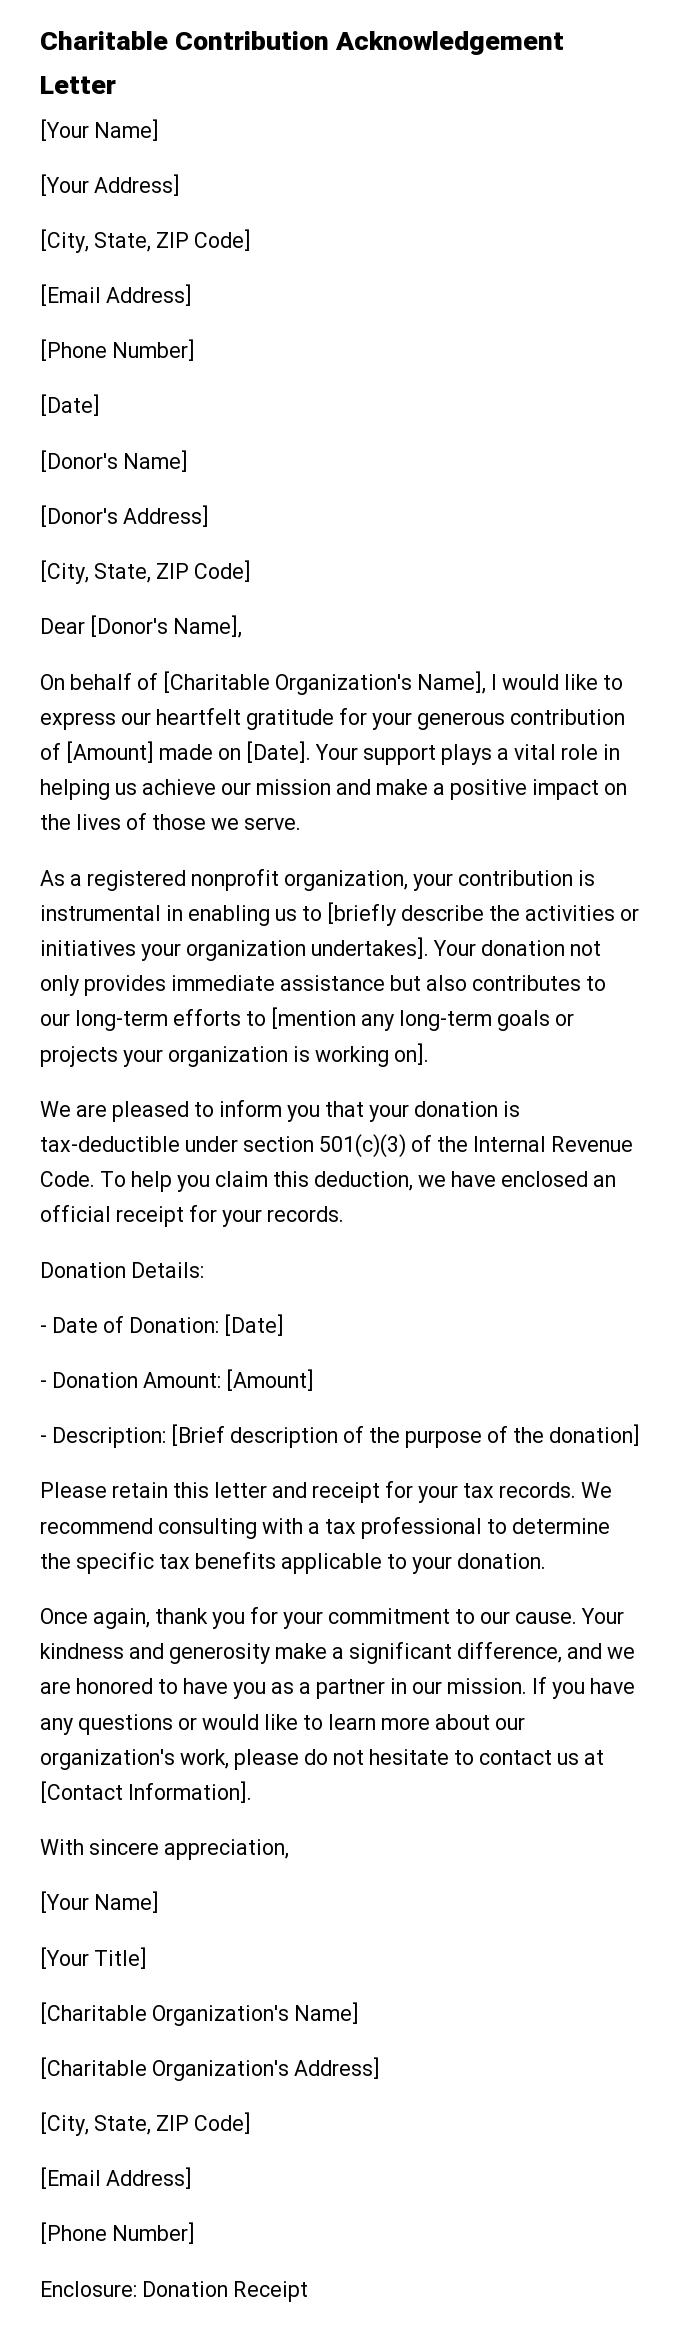 Charitable Contribution Acknowledgement Letter